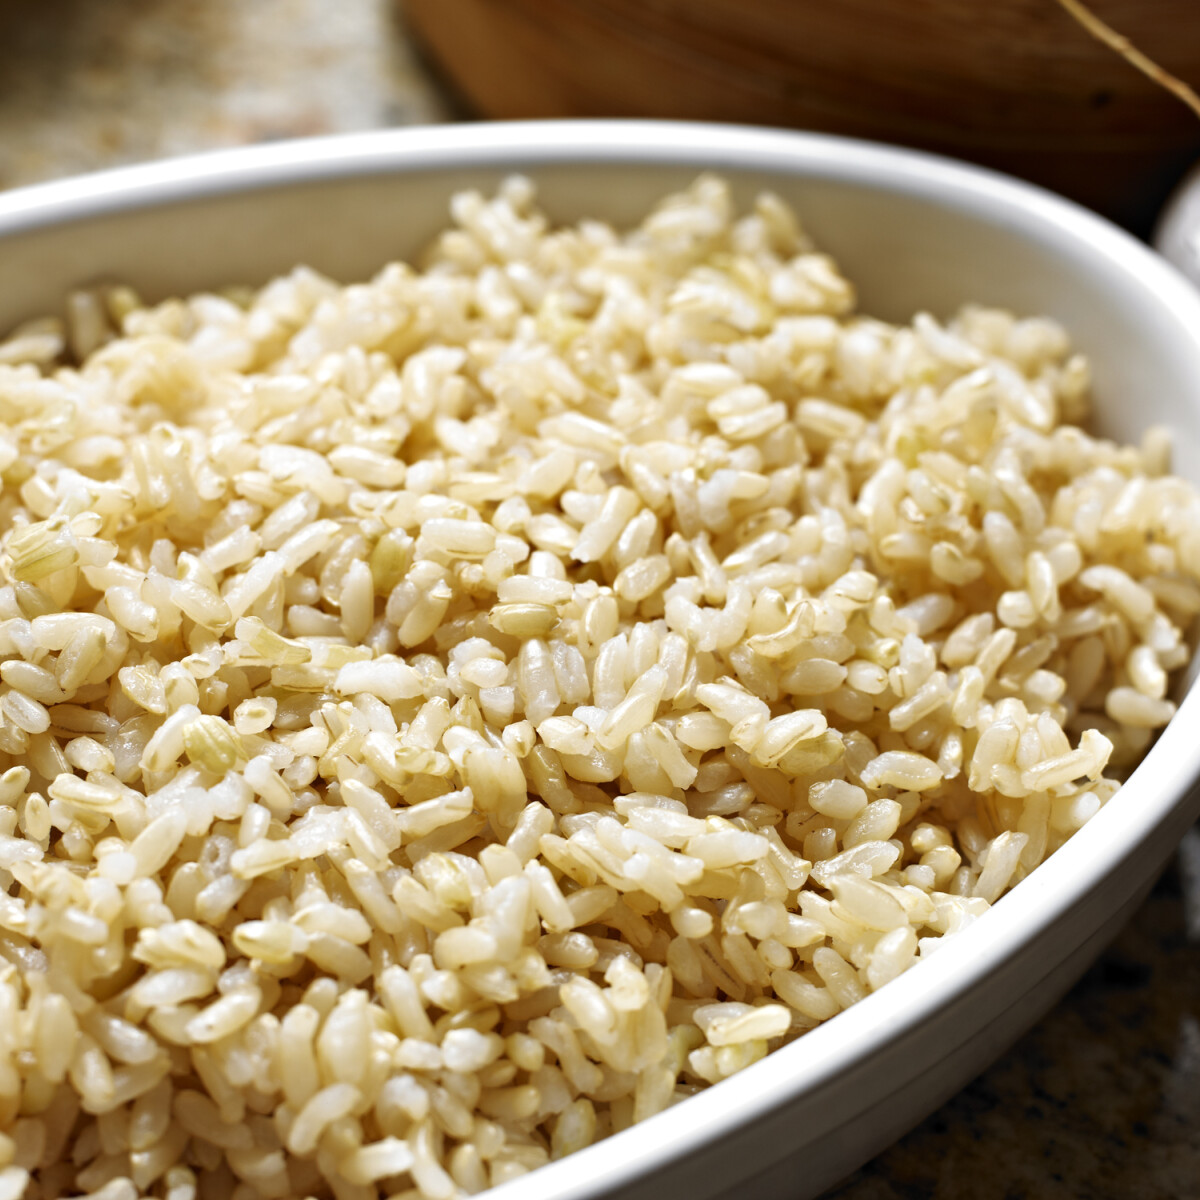 Elhanyagoljuk, pedig szuper köret a barna rizs...bizonyítjuk!